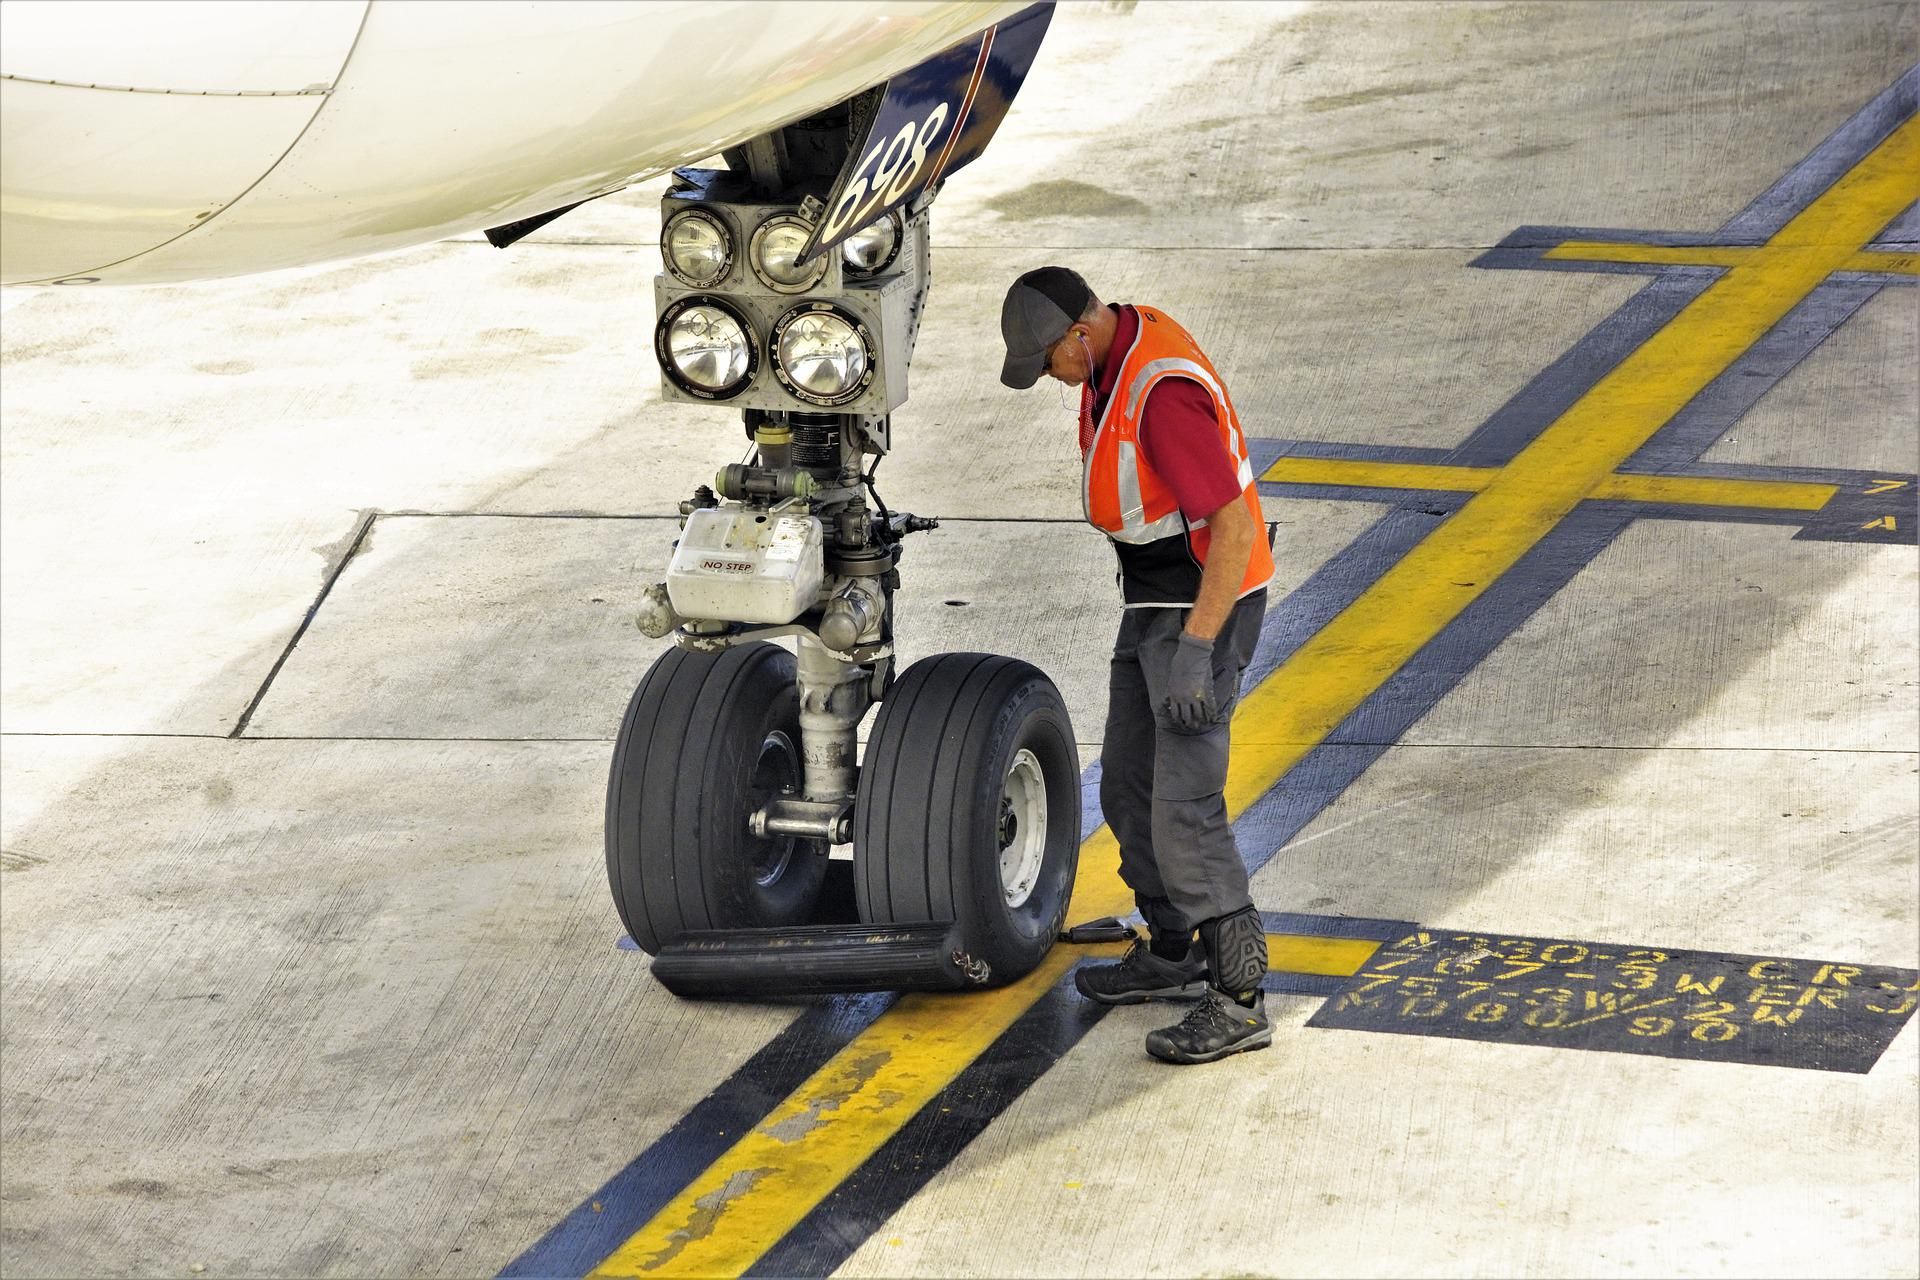 A ground crew member stands next to nose landing gear on an aircraft.